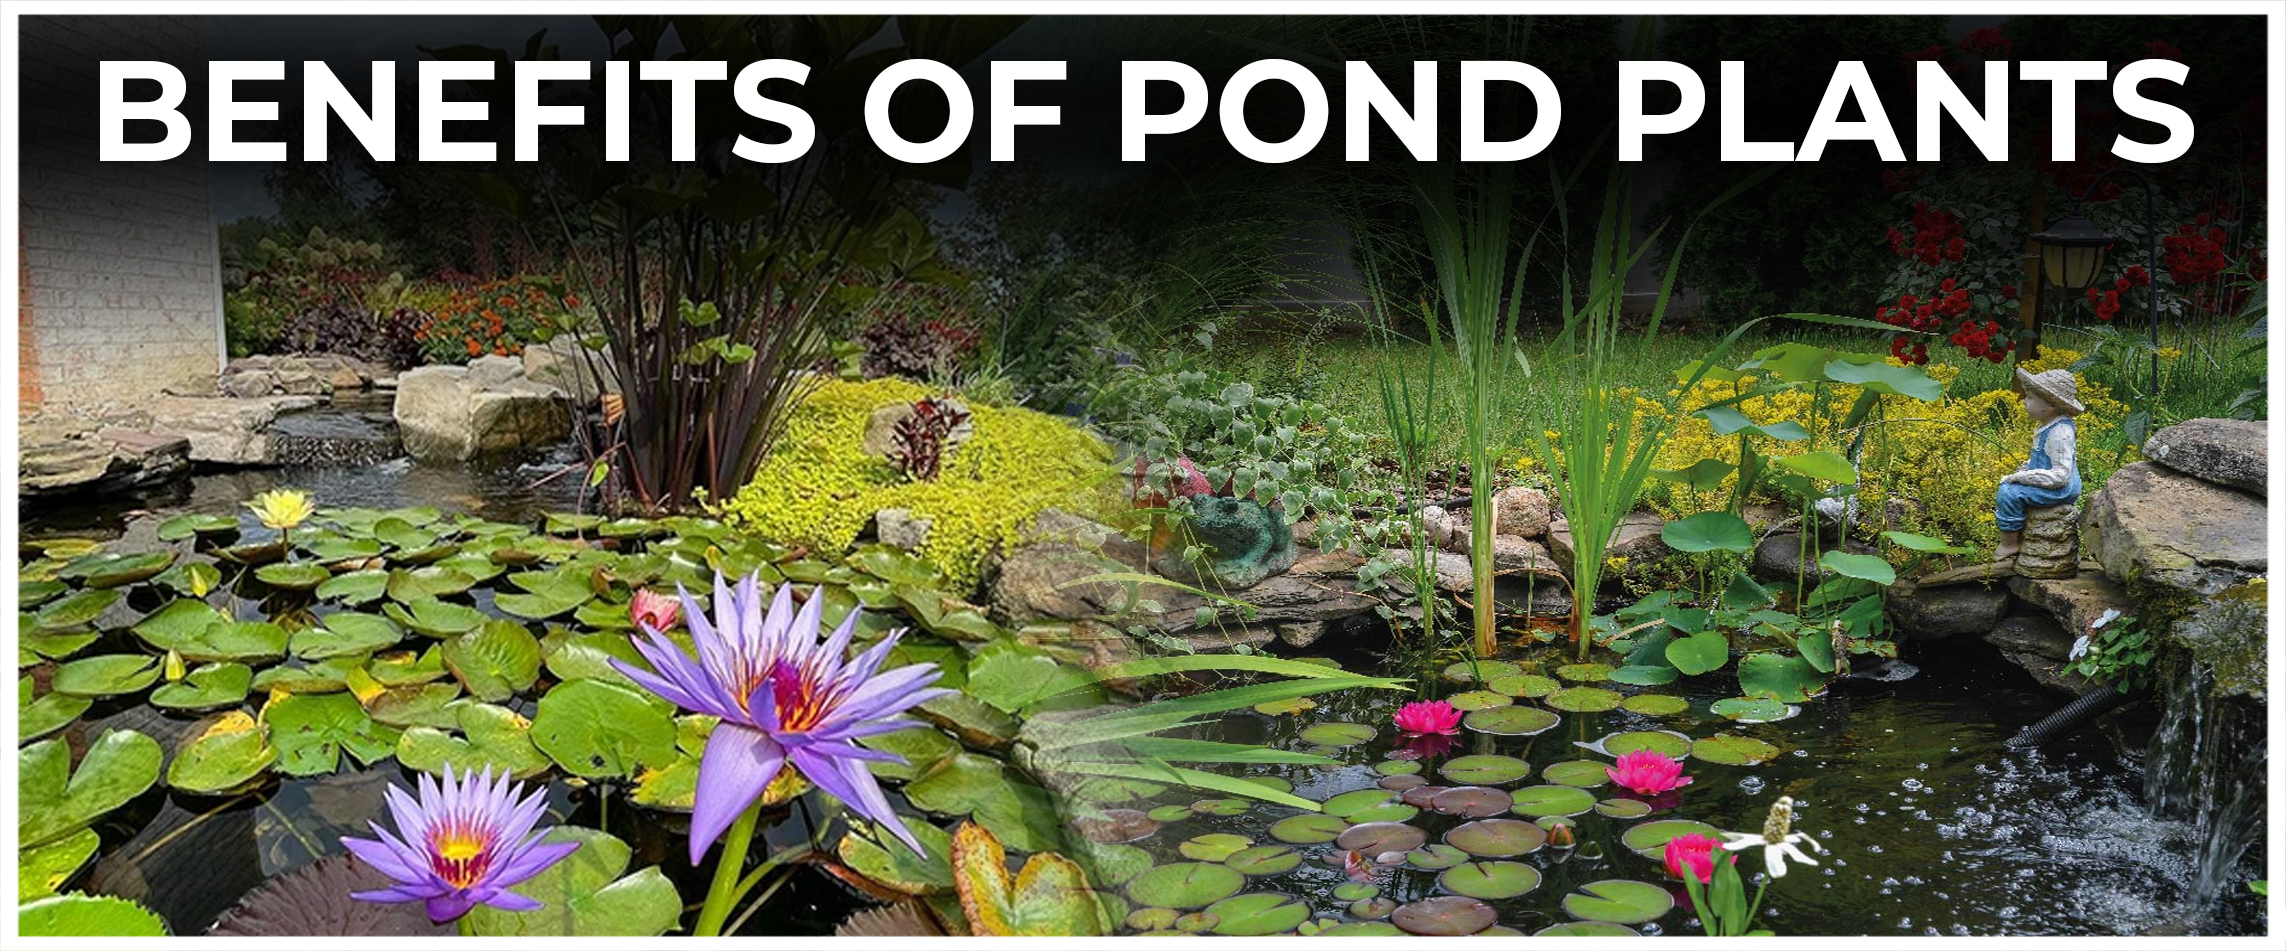  Benefits of Pond Plants